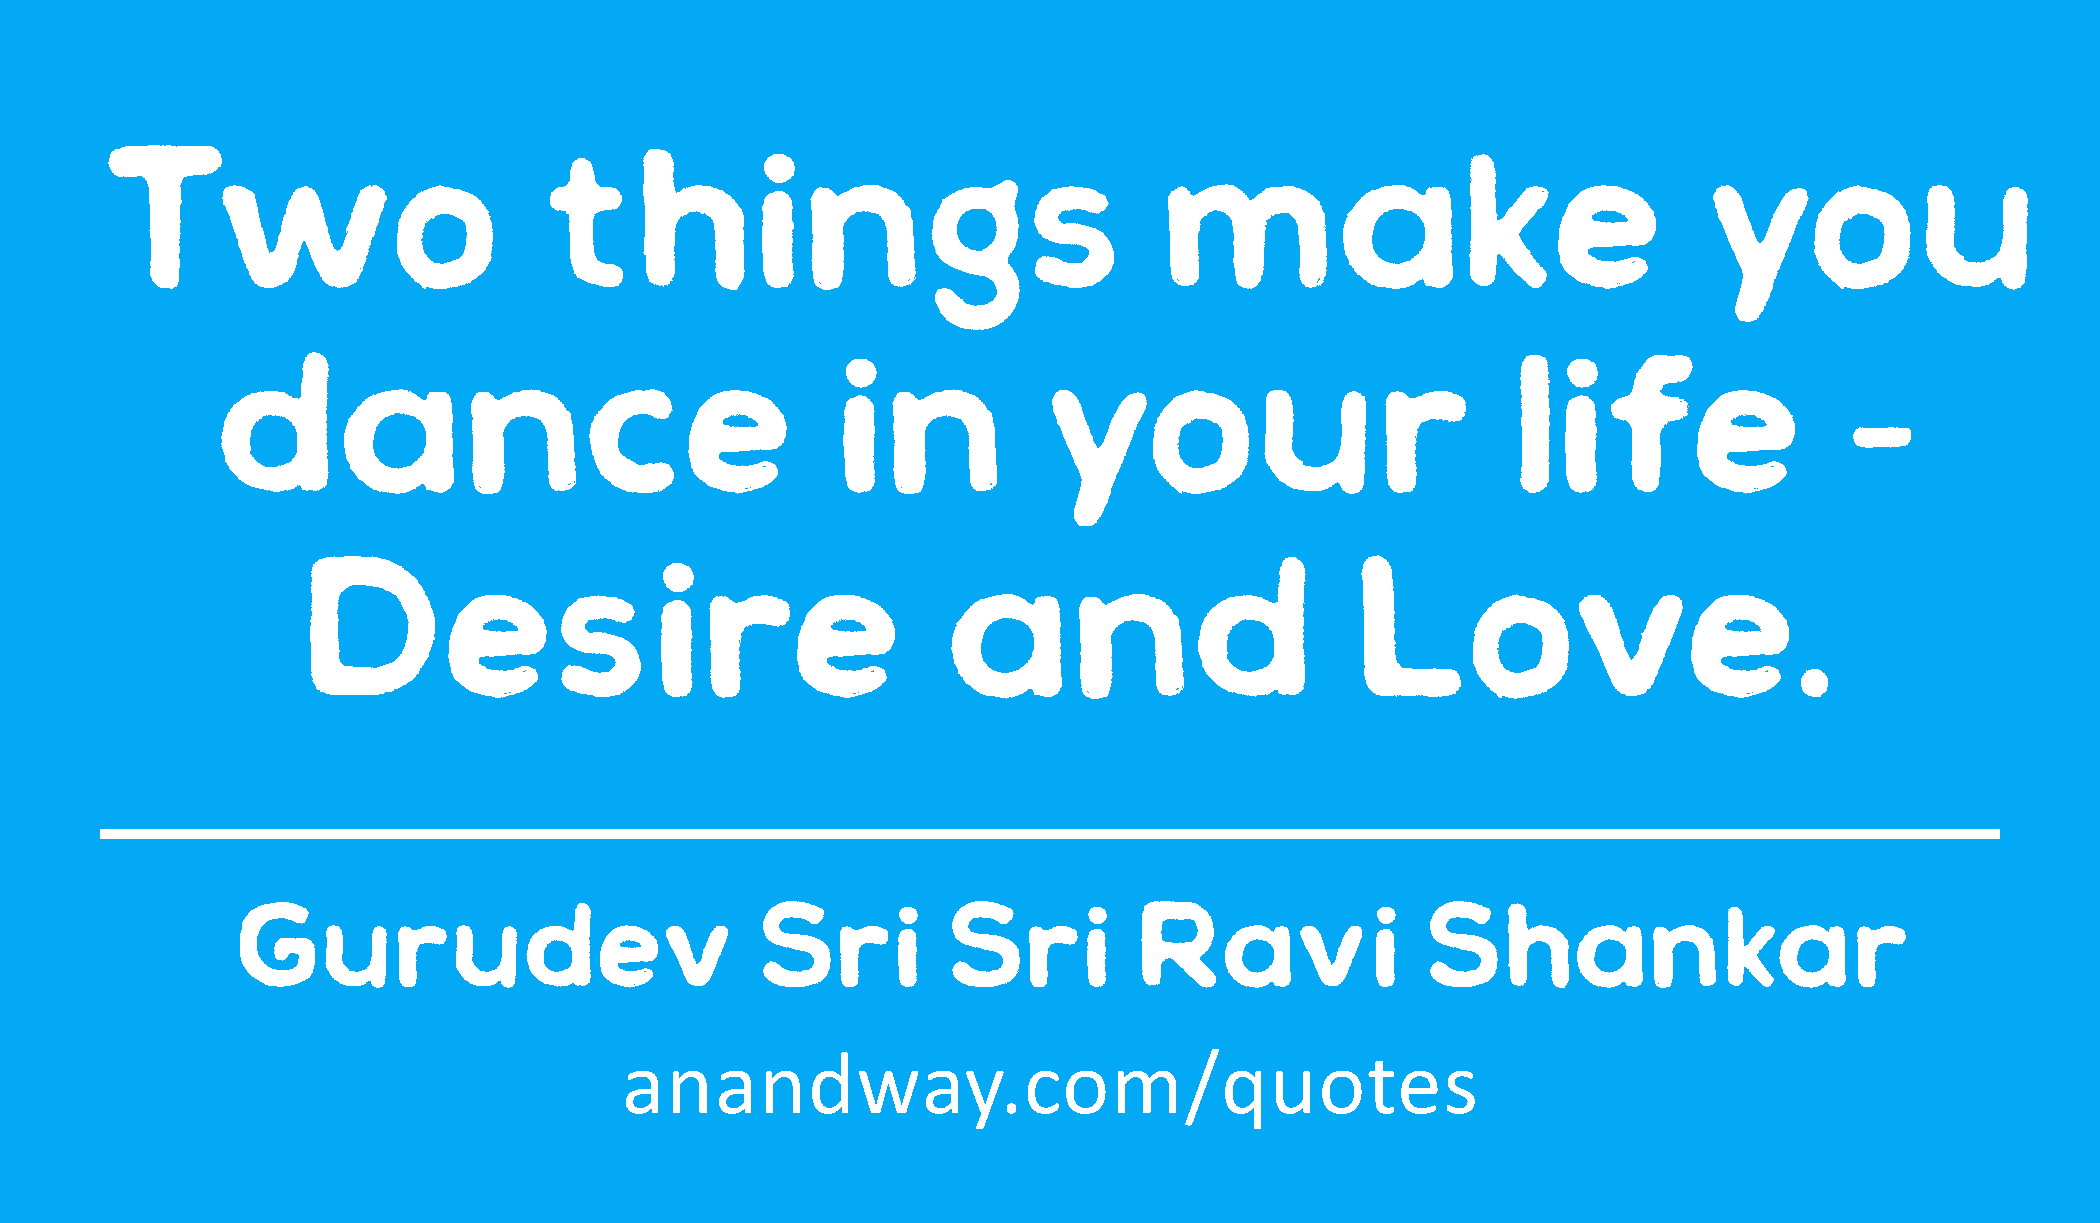 Two things make you dance in your life - Desire and Love. 
 -Gurudev Sri Sri Ravi Shankar